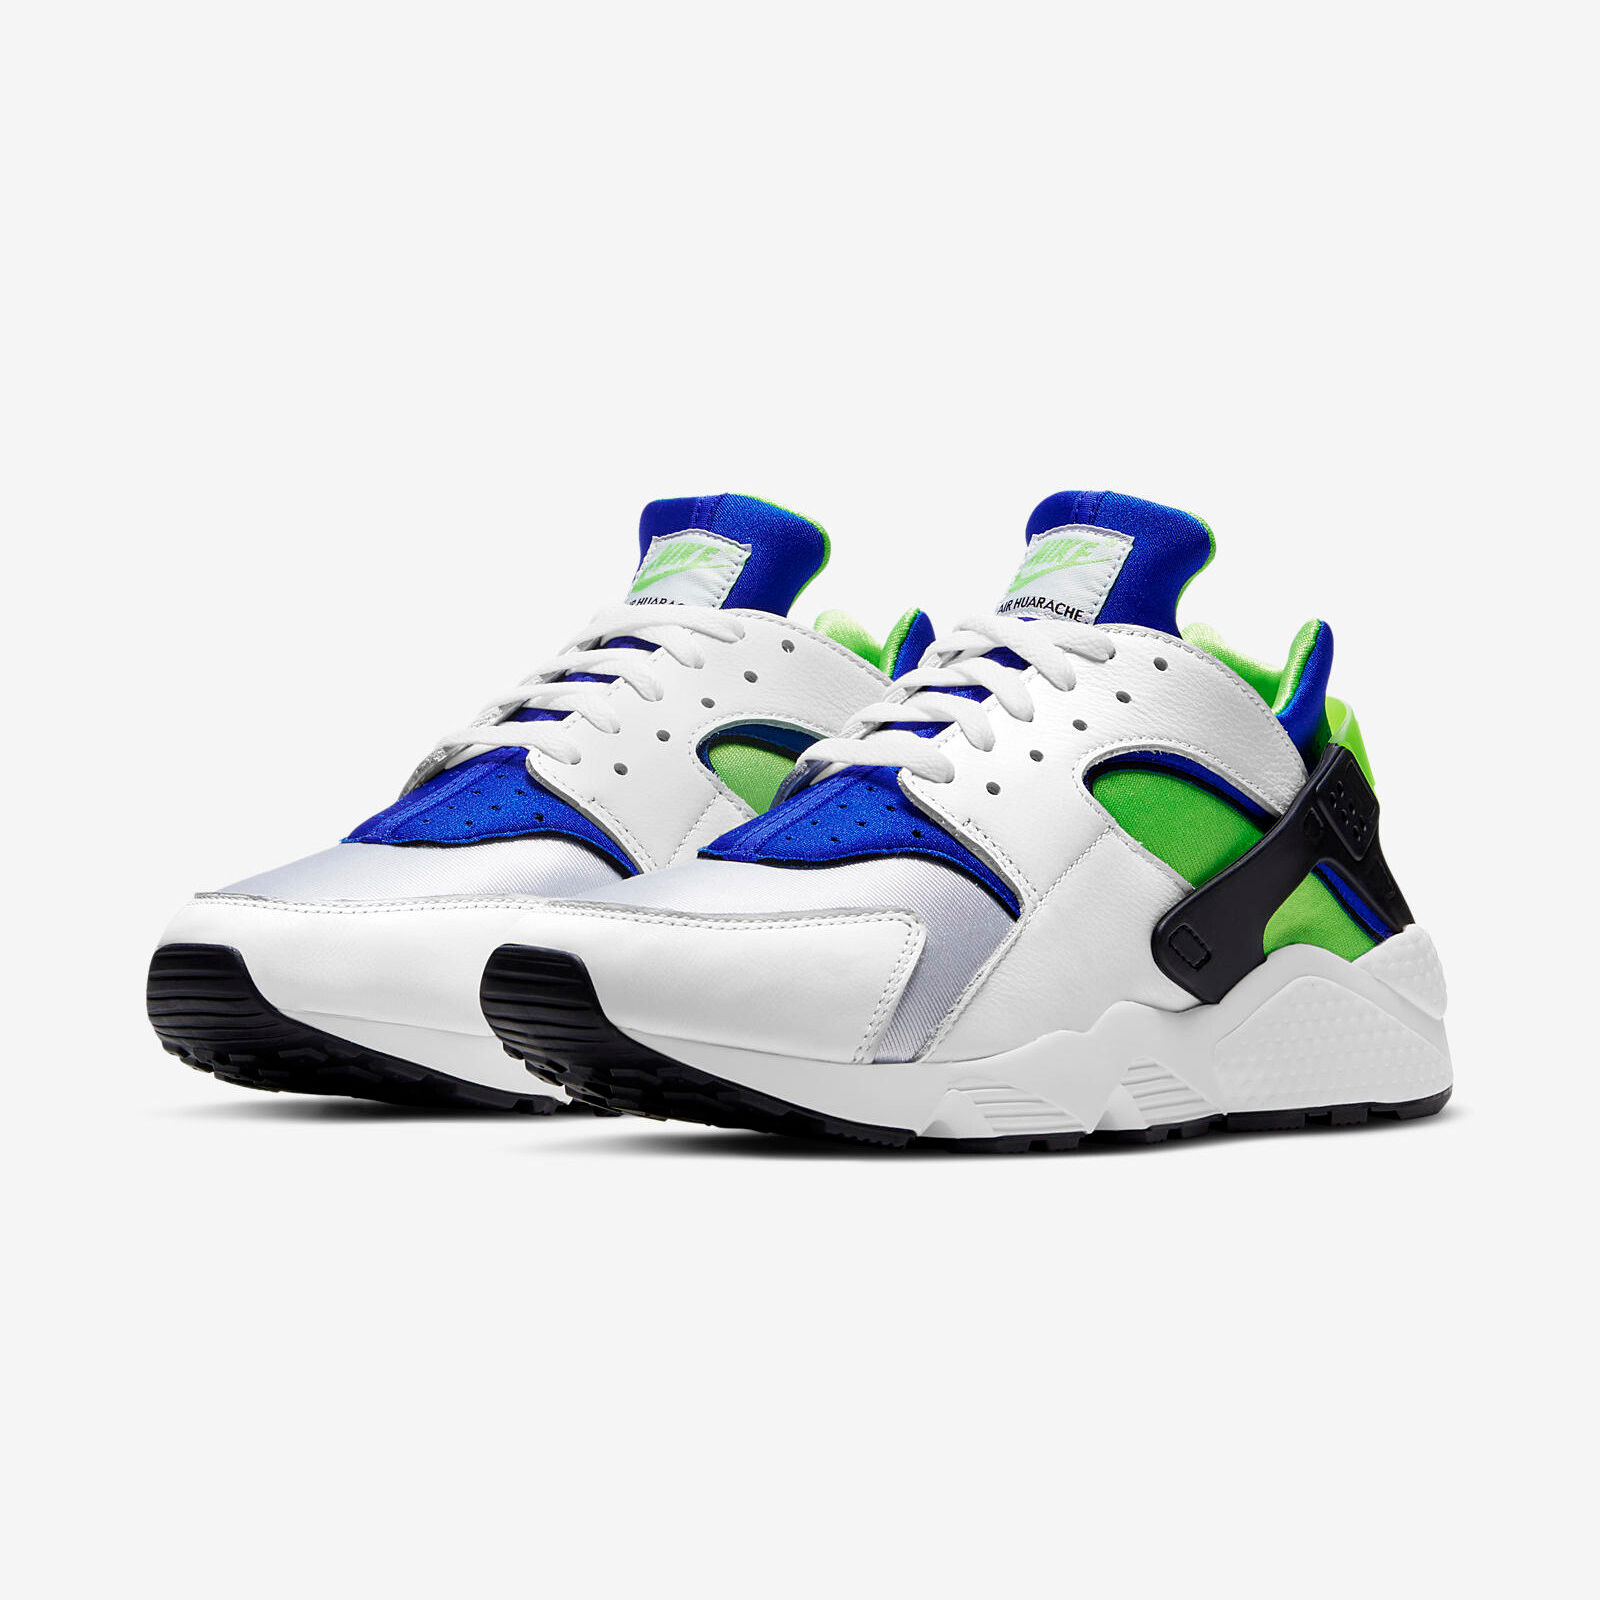 Nike Air Huarache OG
White / Green / Blue